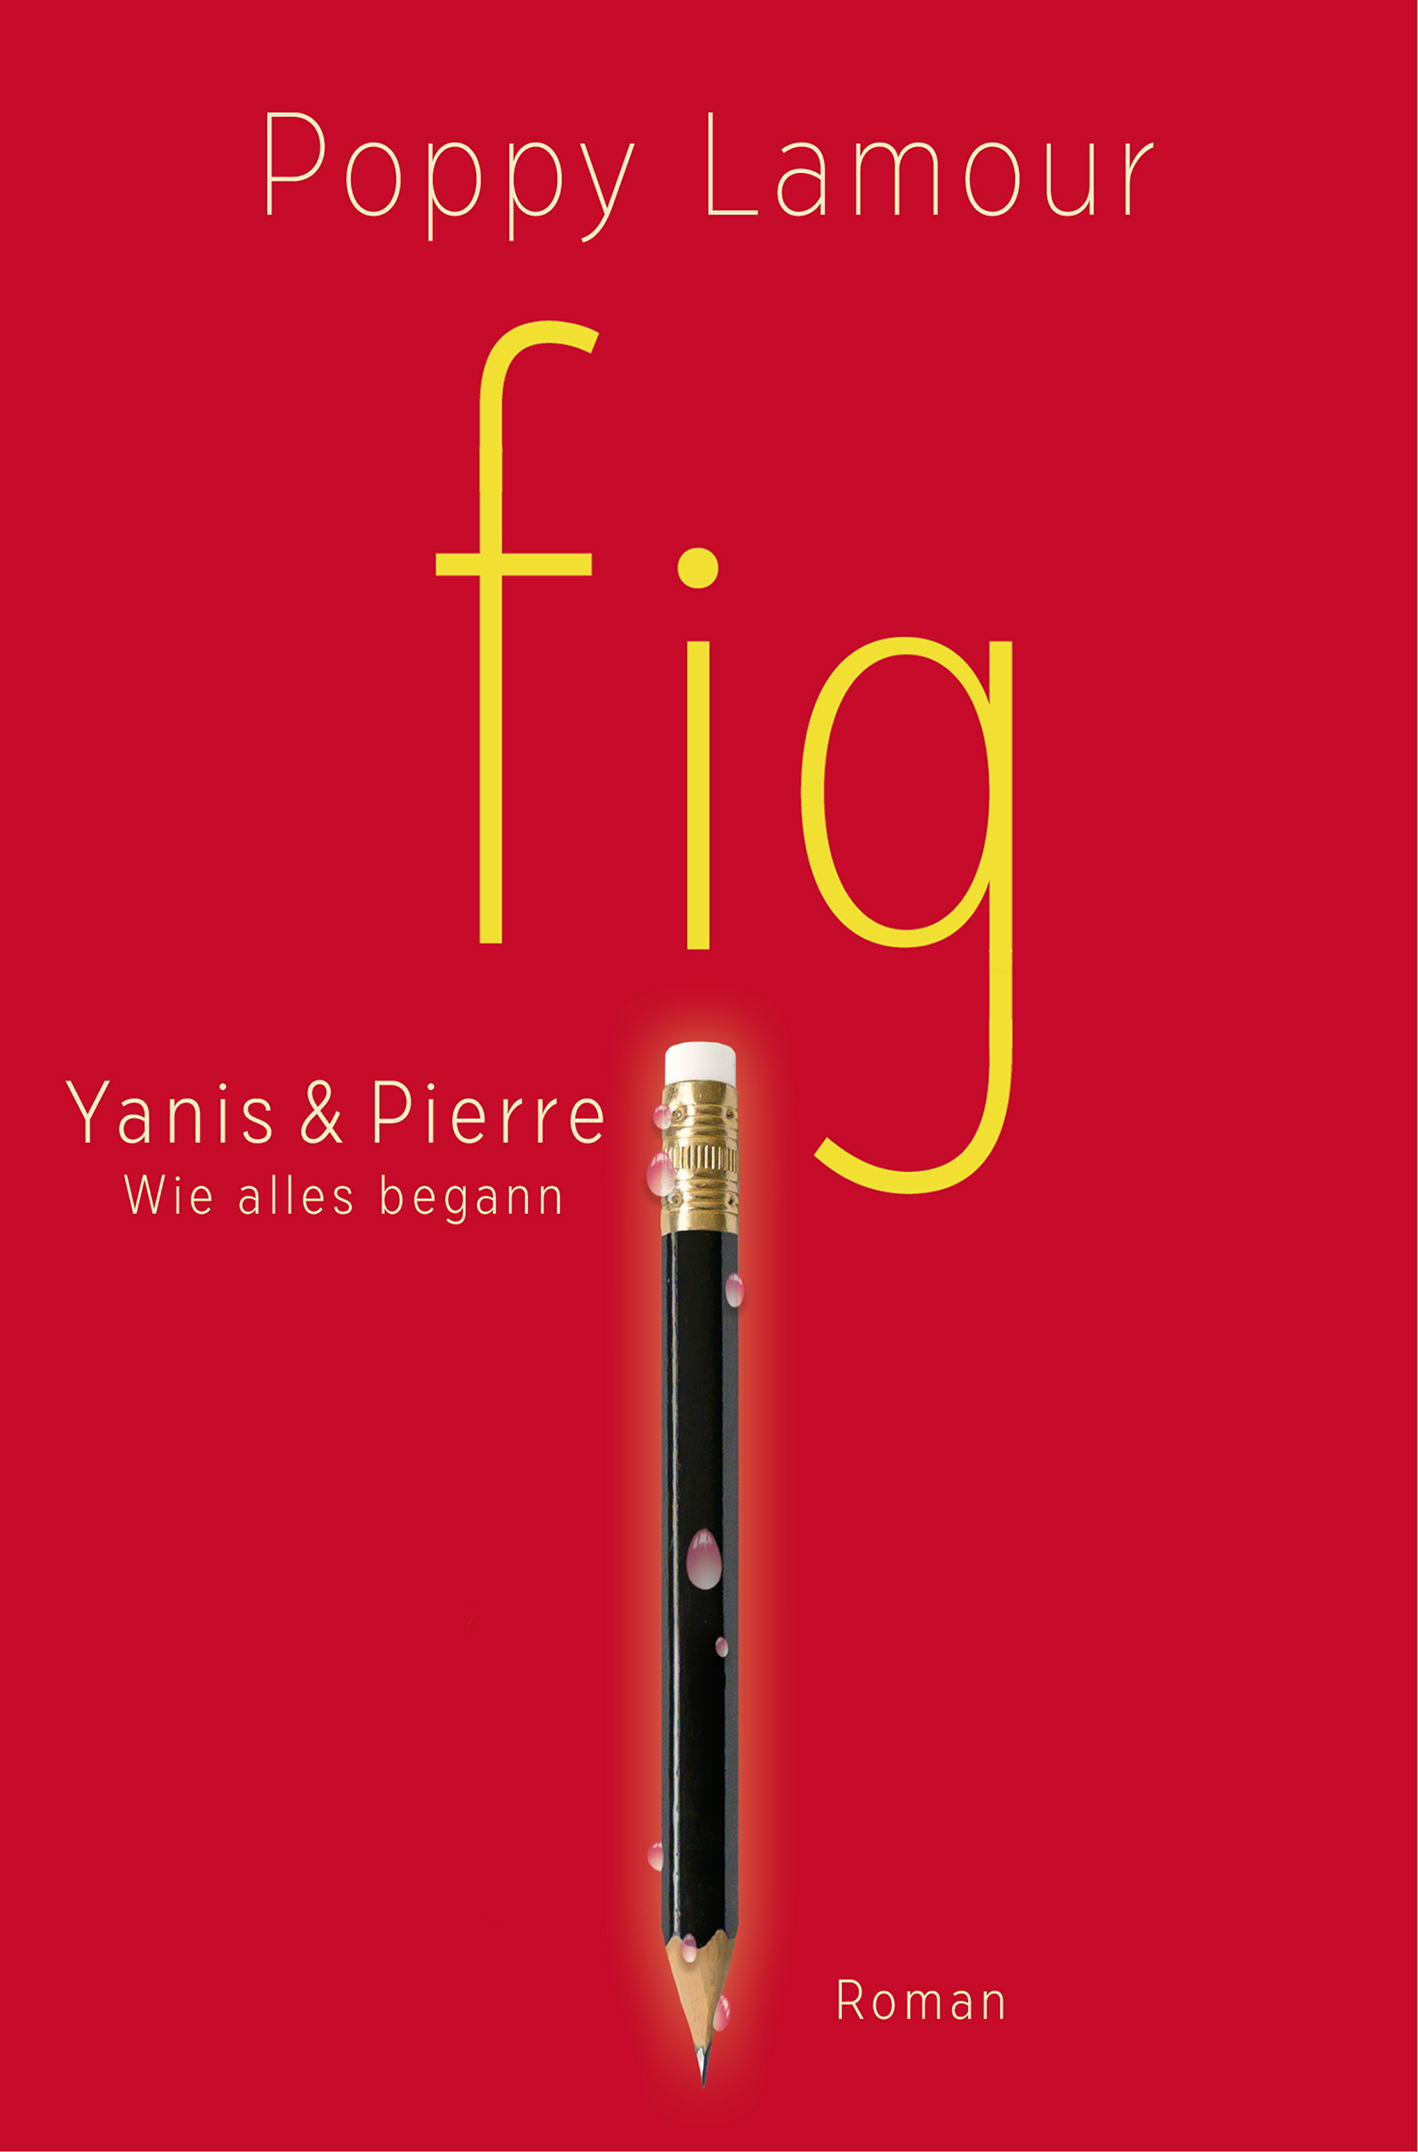 fig – Yanis & Pierre Profilbild